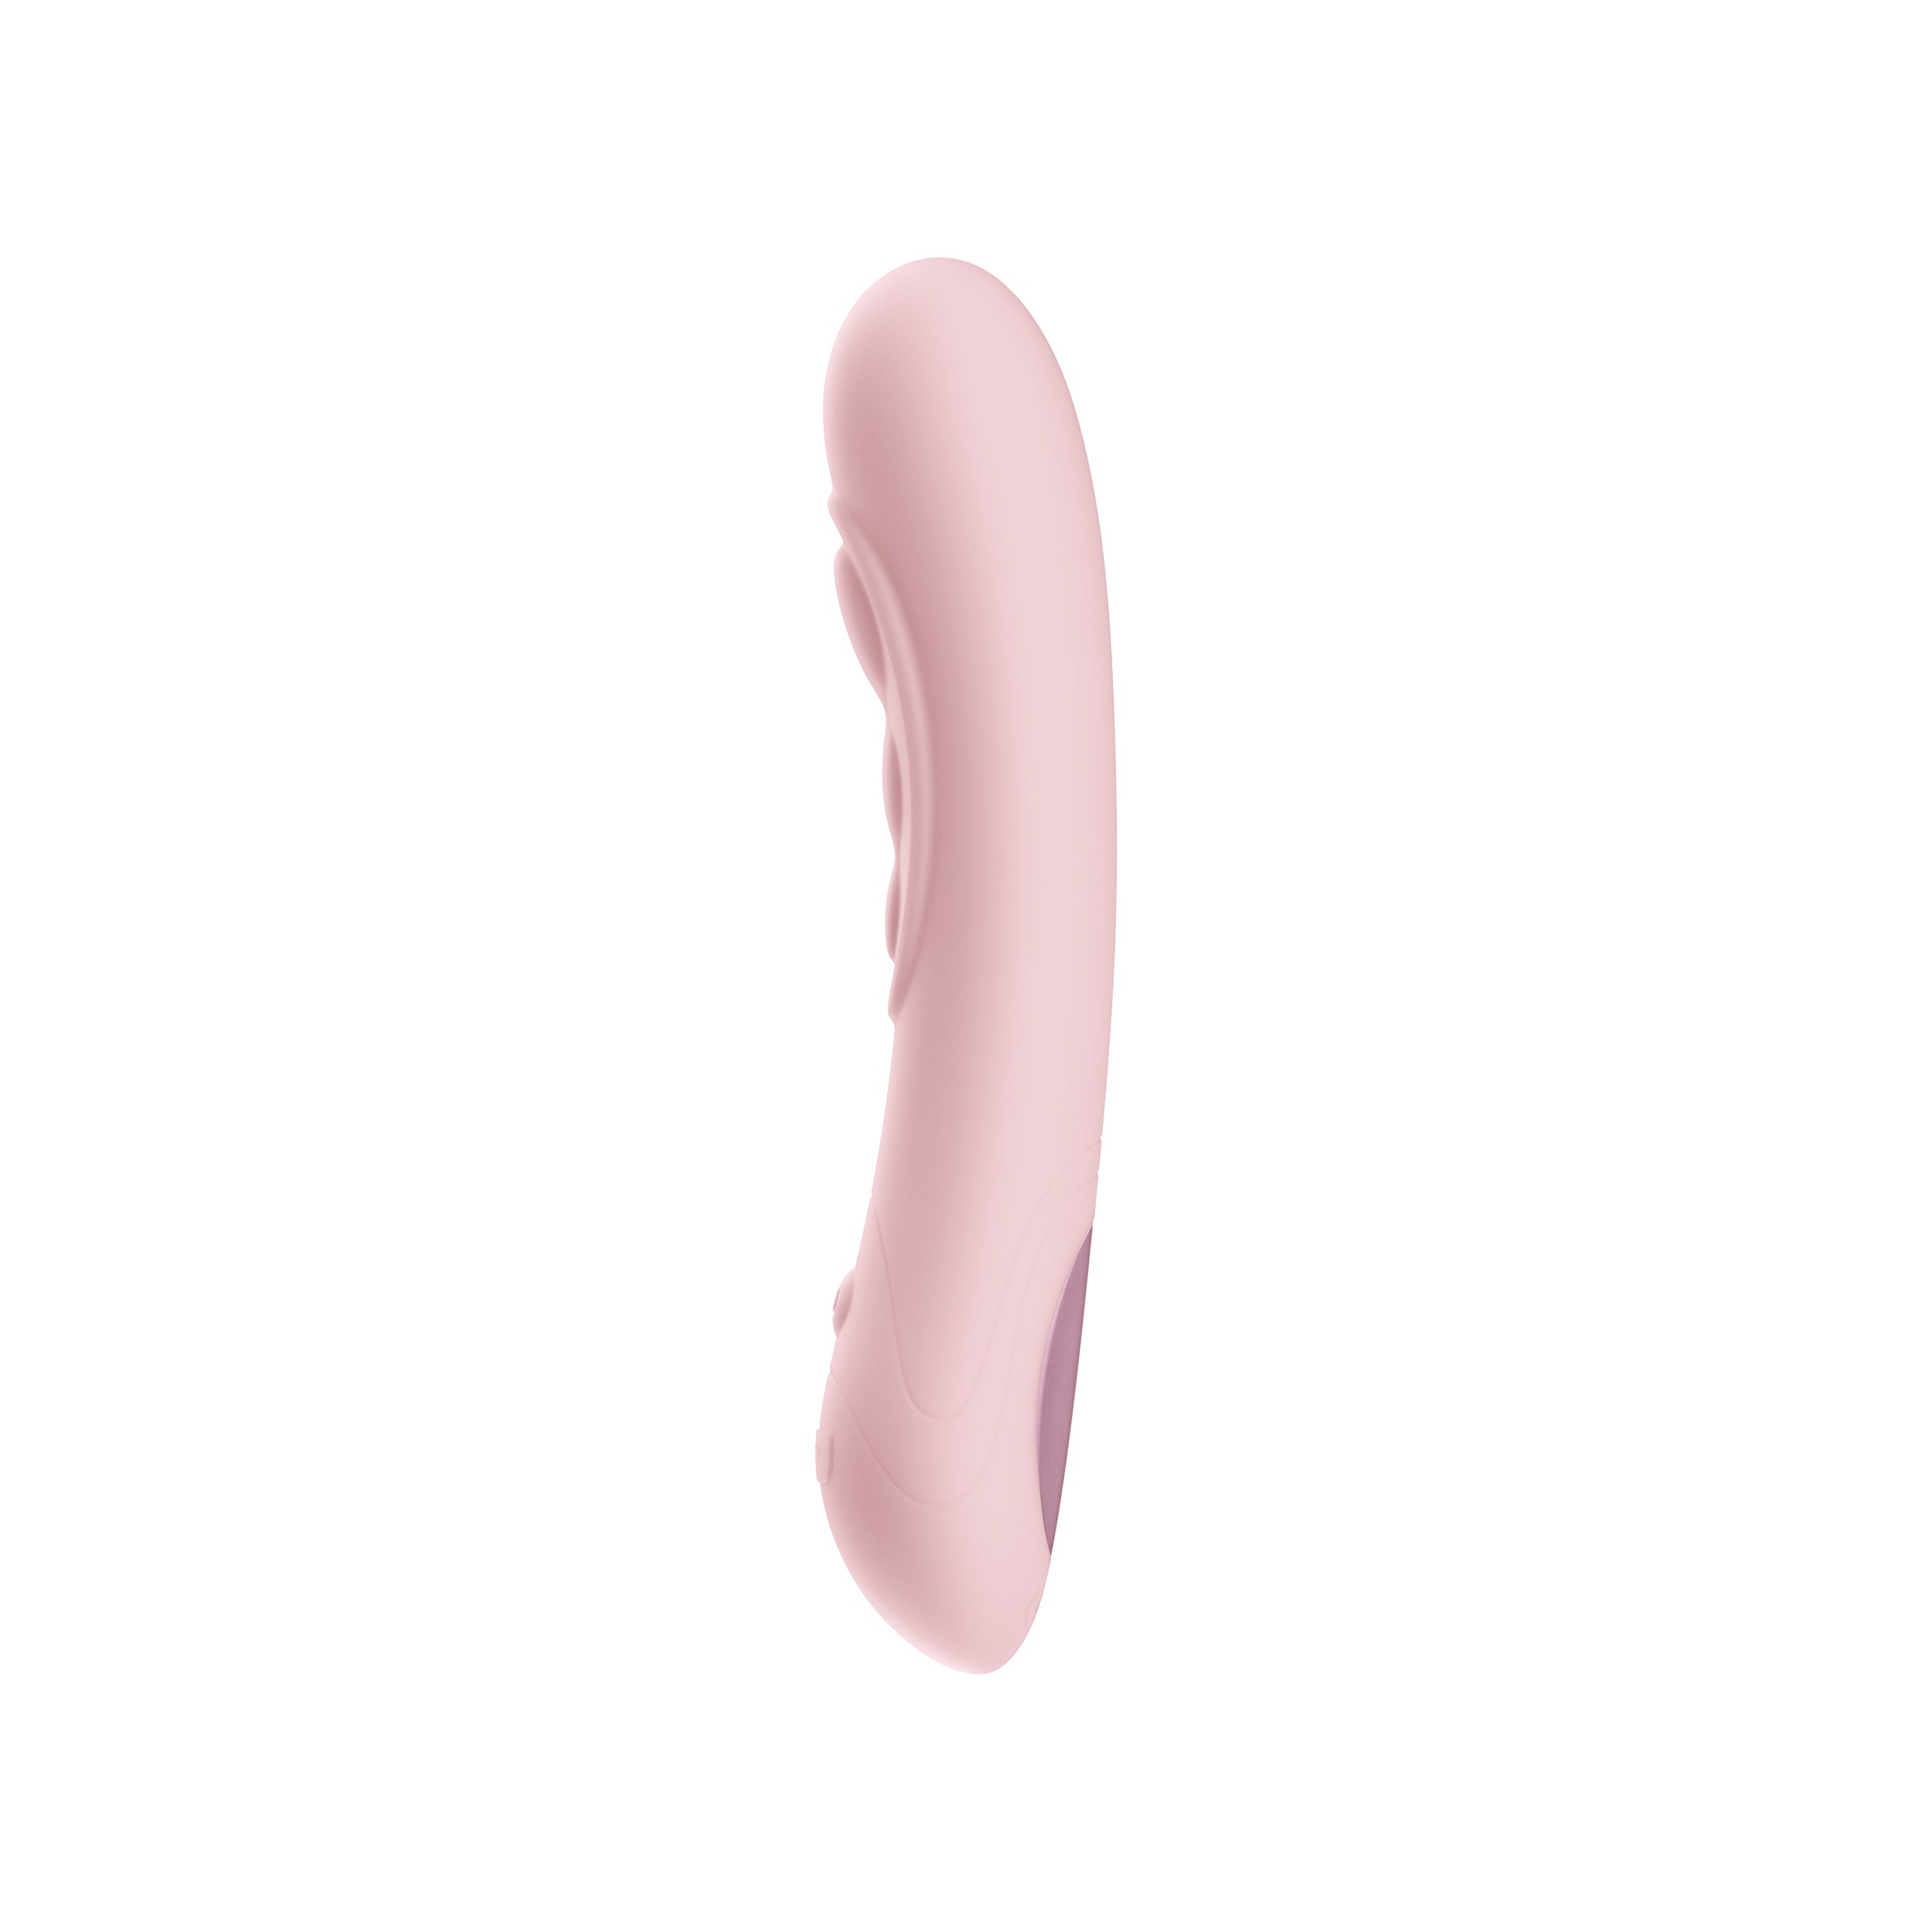 Kiiroo Pearl3 G-spot vibrator Pink